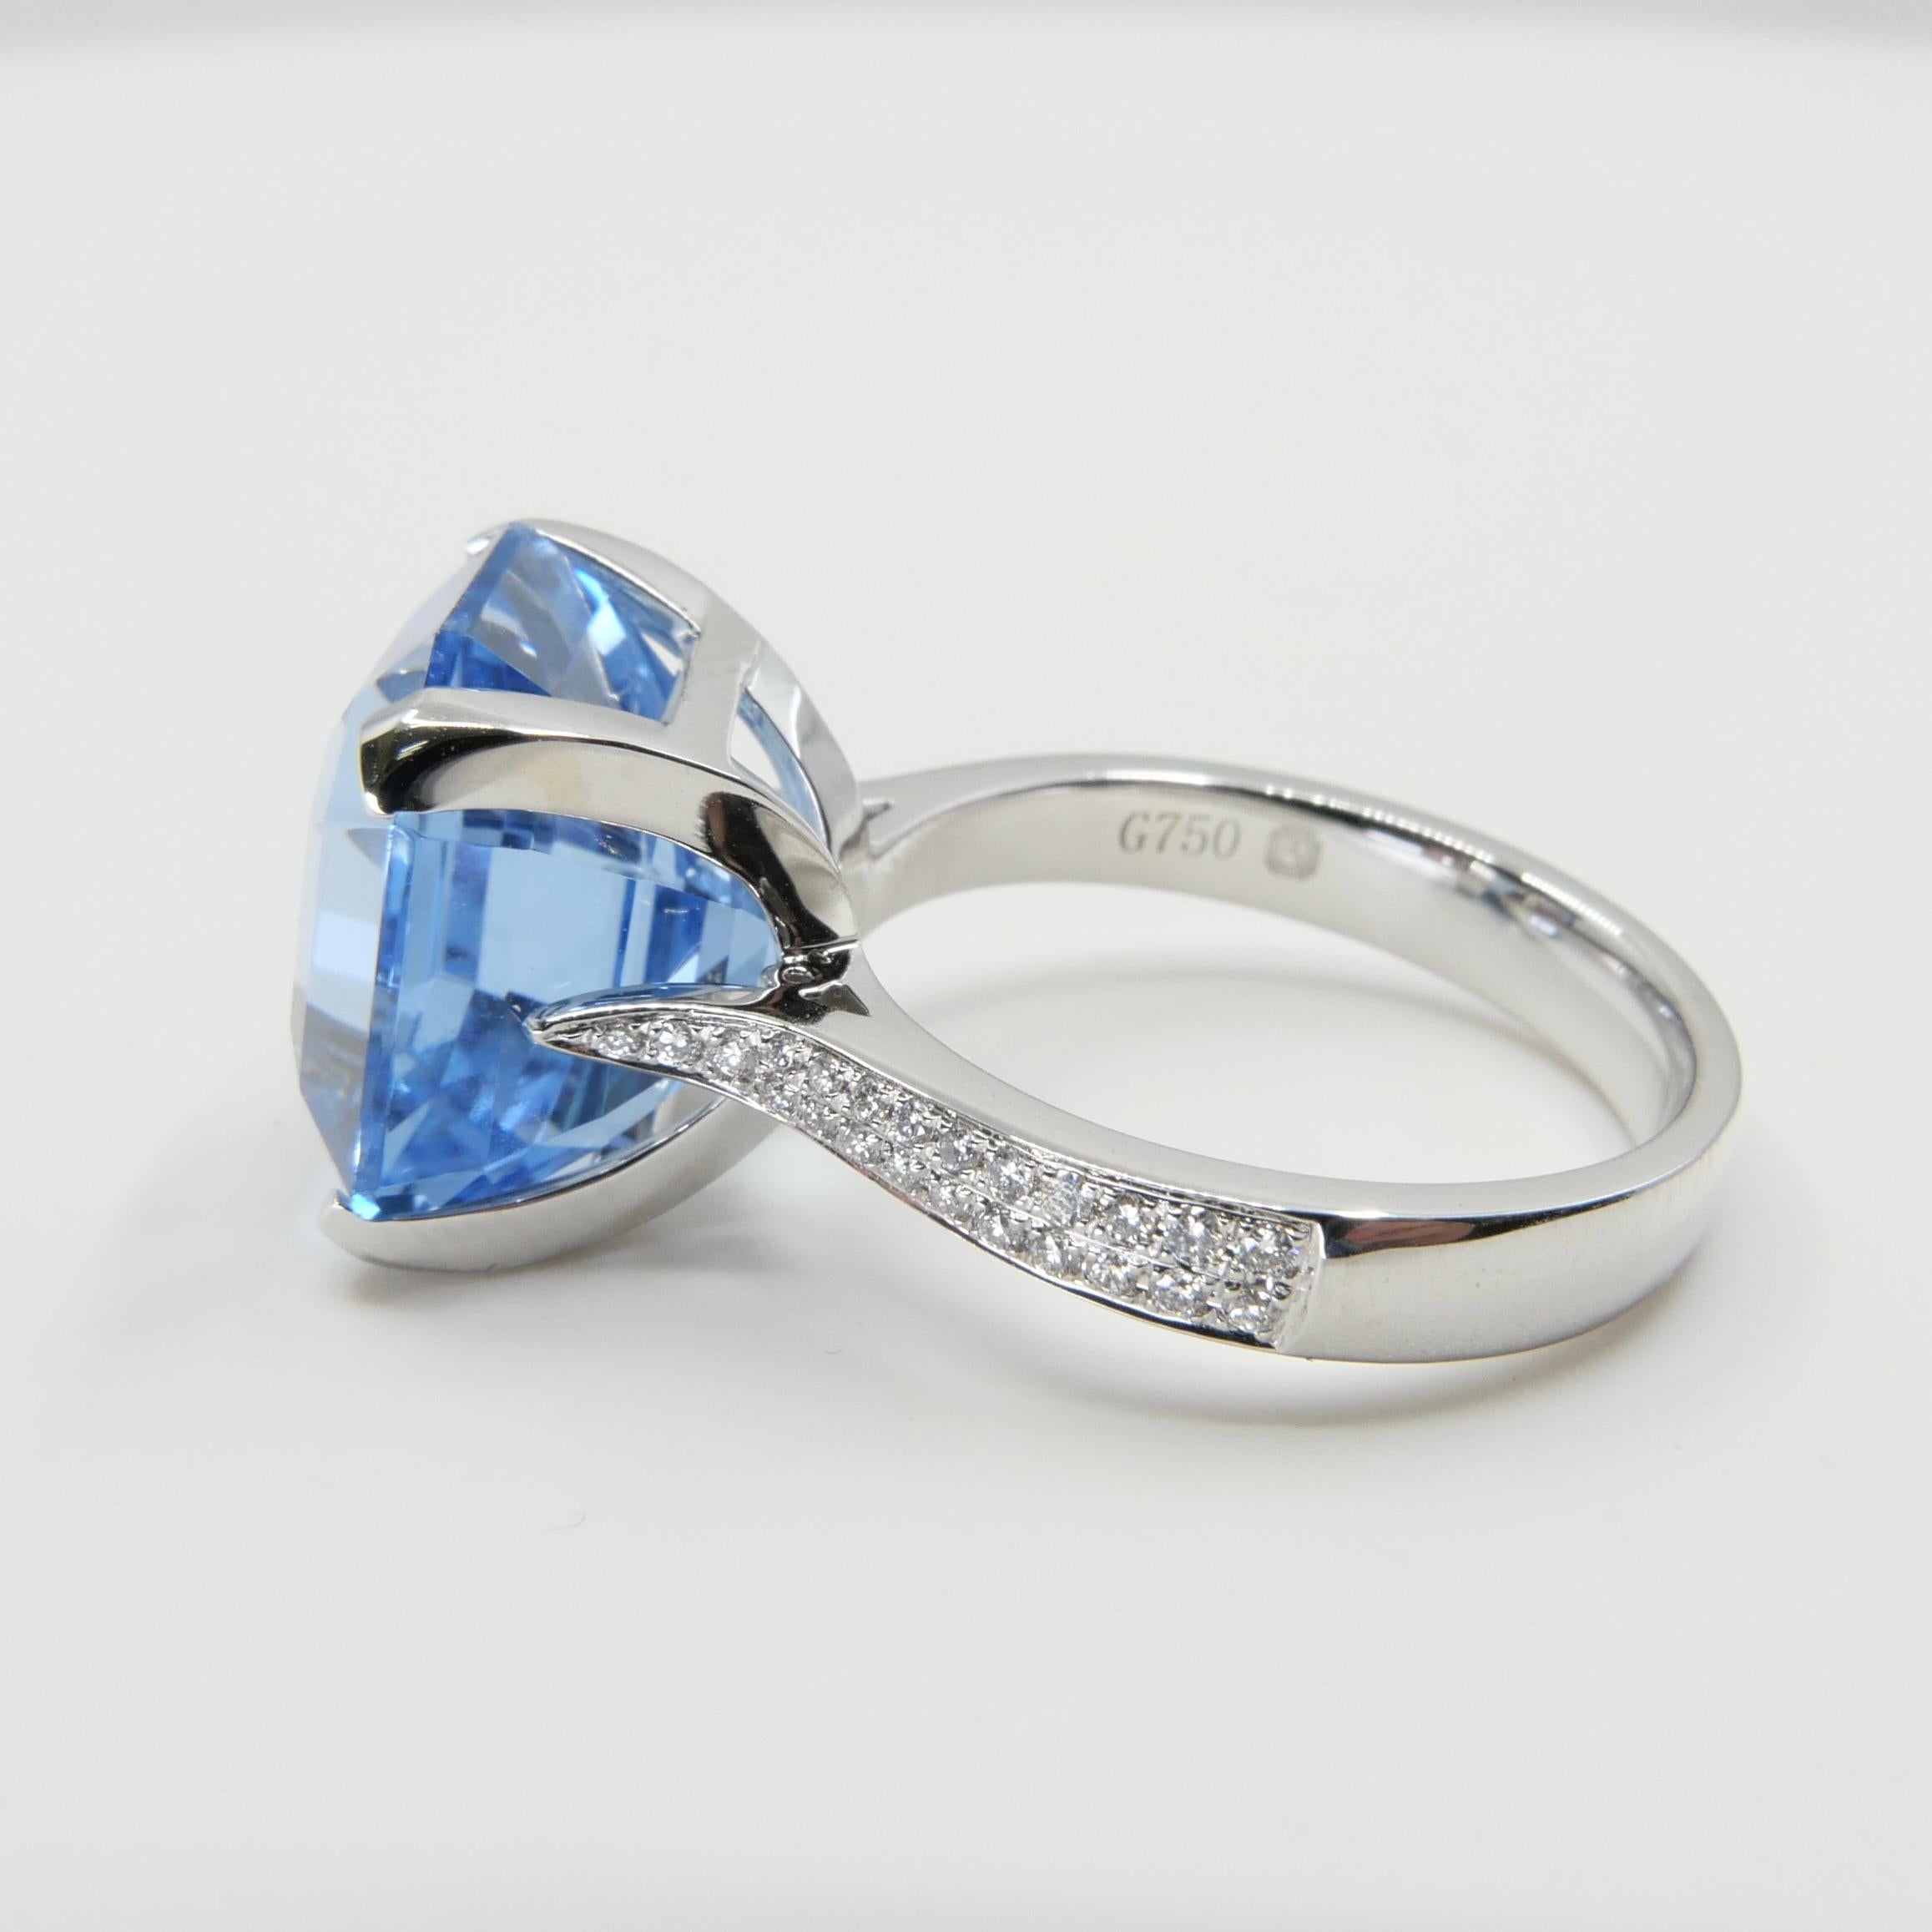 Contemporary Certified 11.23 Cts Asscher Cut Aquamarine Diamond Ring, True Santa Maria Color